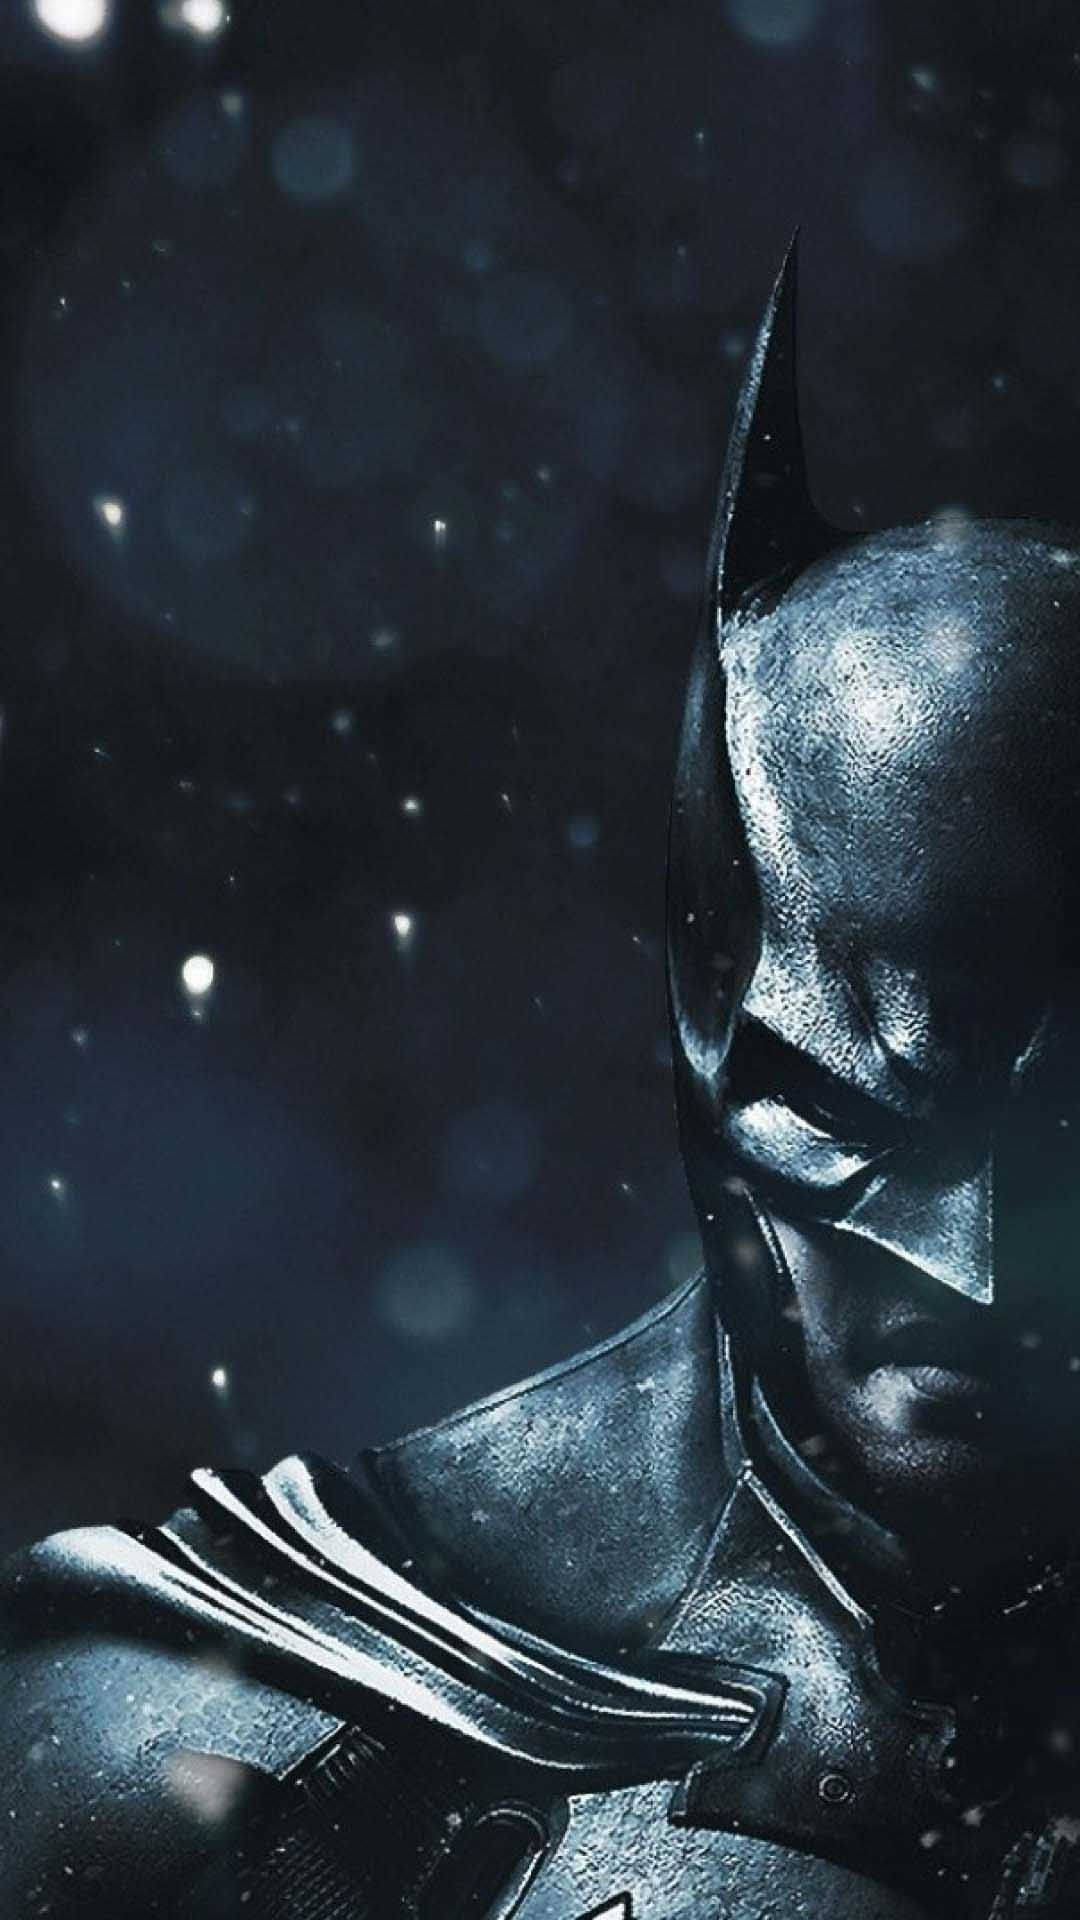 Batman: Arkham Origins para iPhone - Download